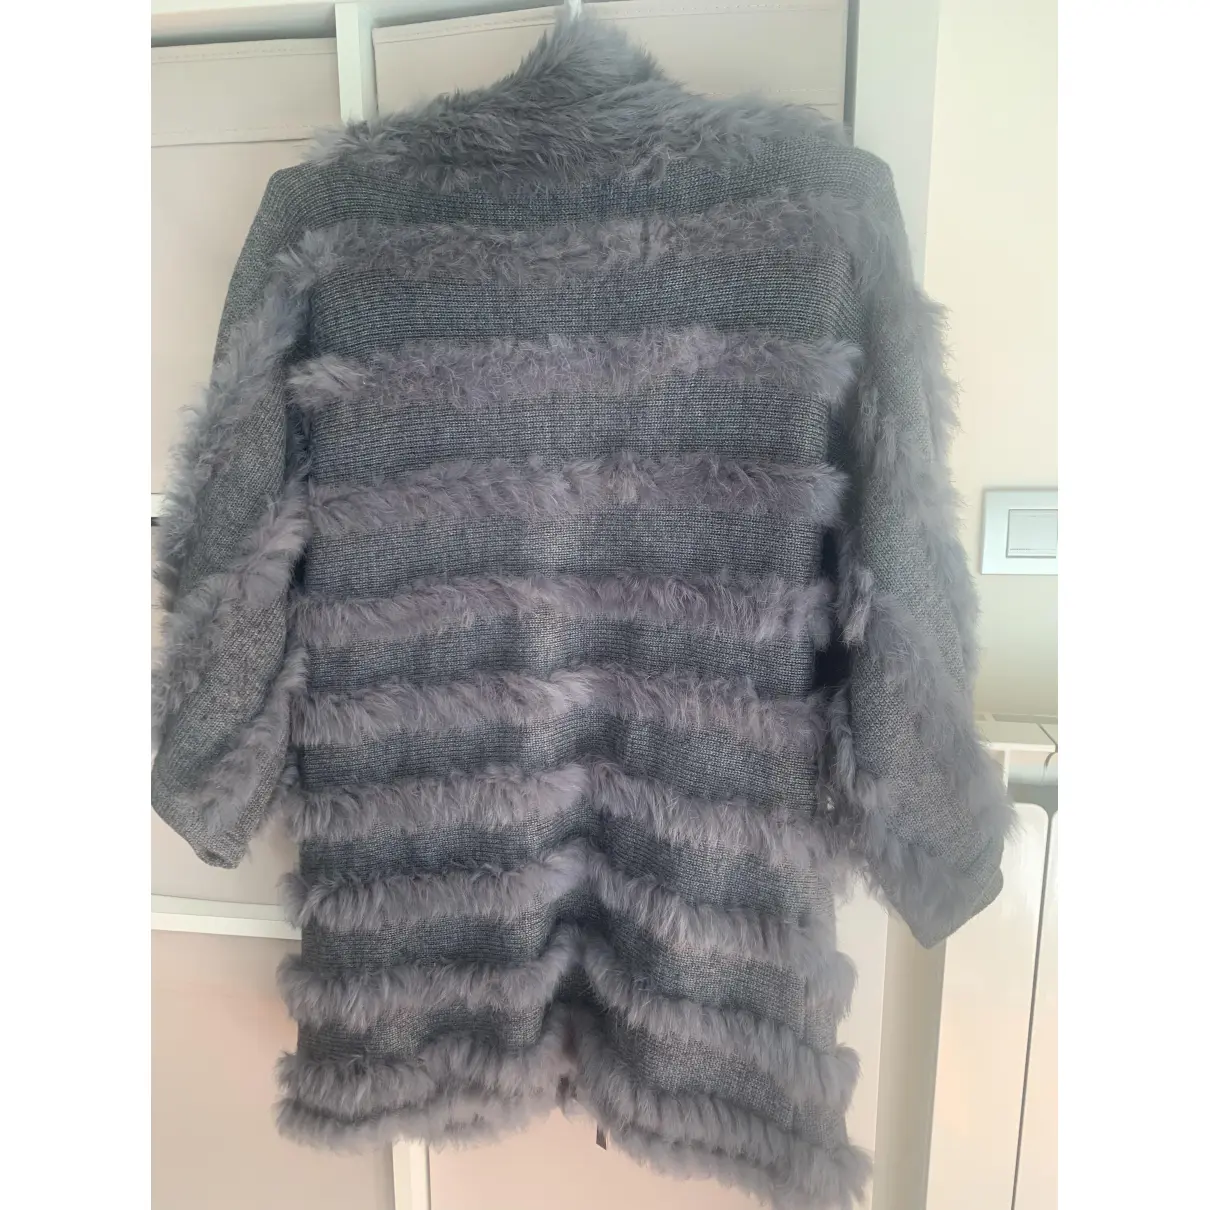 Buy Pinko Wool jacket online